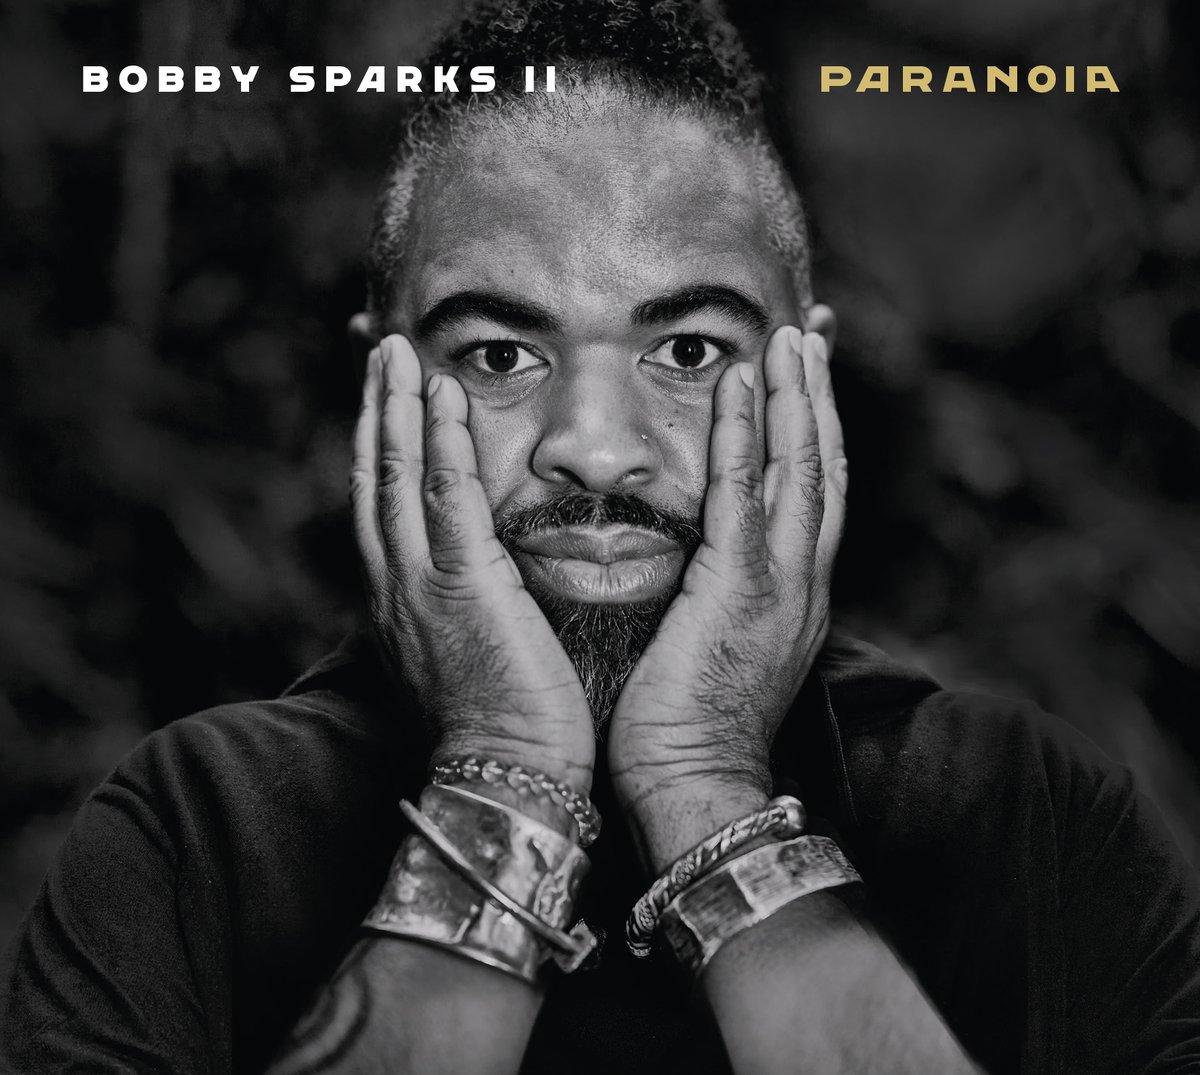 Bobby Sparks paranoia